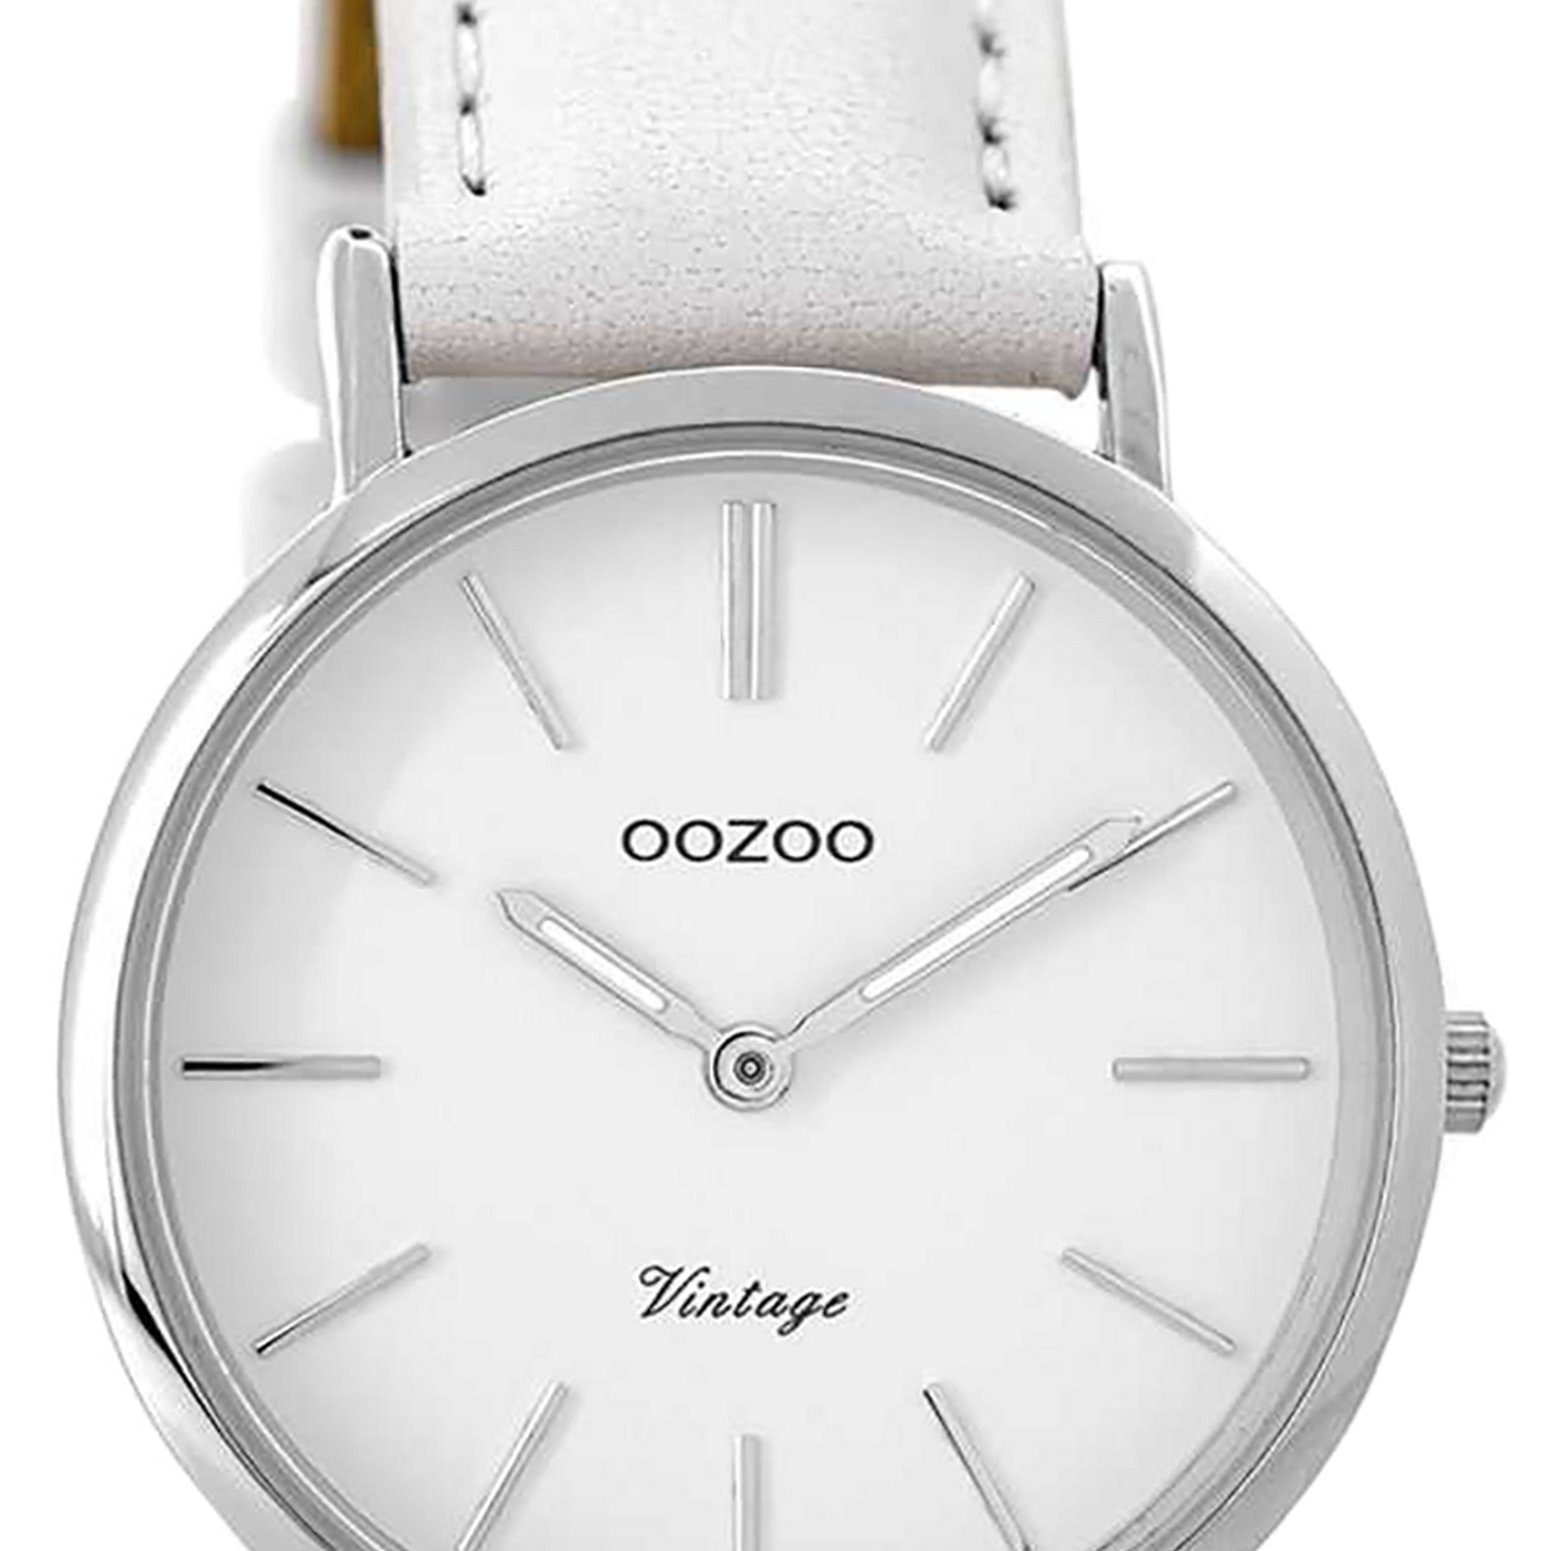 Gehäuse Damenuhr rund, Oozoo Lederarmband Armbanduhr Fashion, mittel weiß, (ca. 32mm), weiß, Quarzuhr OOZOO extraflaches Damen